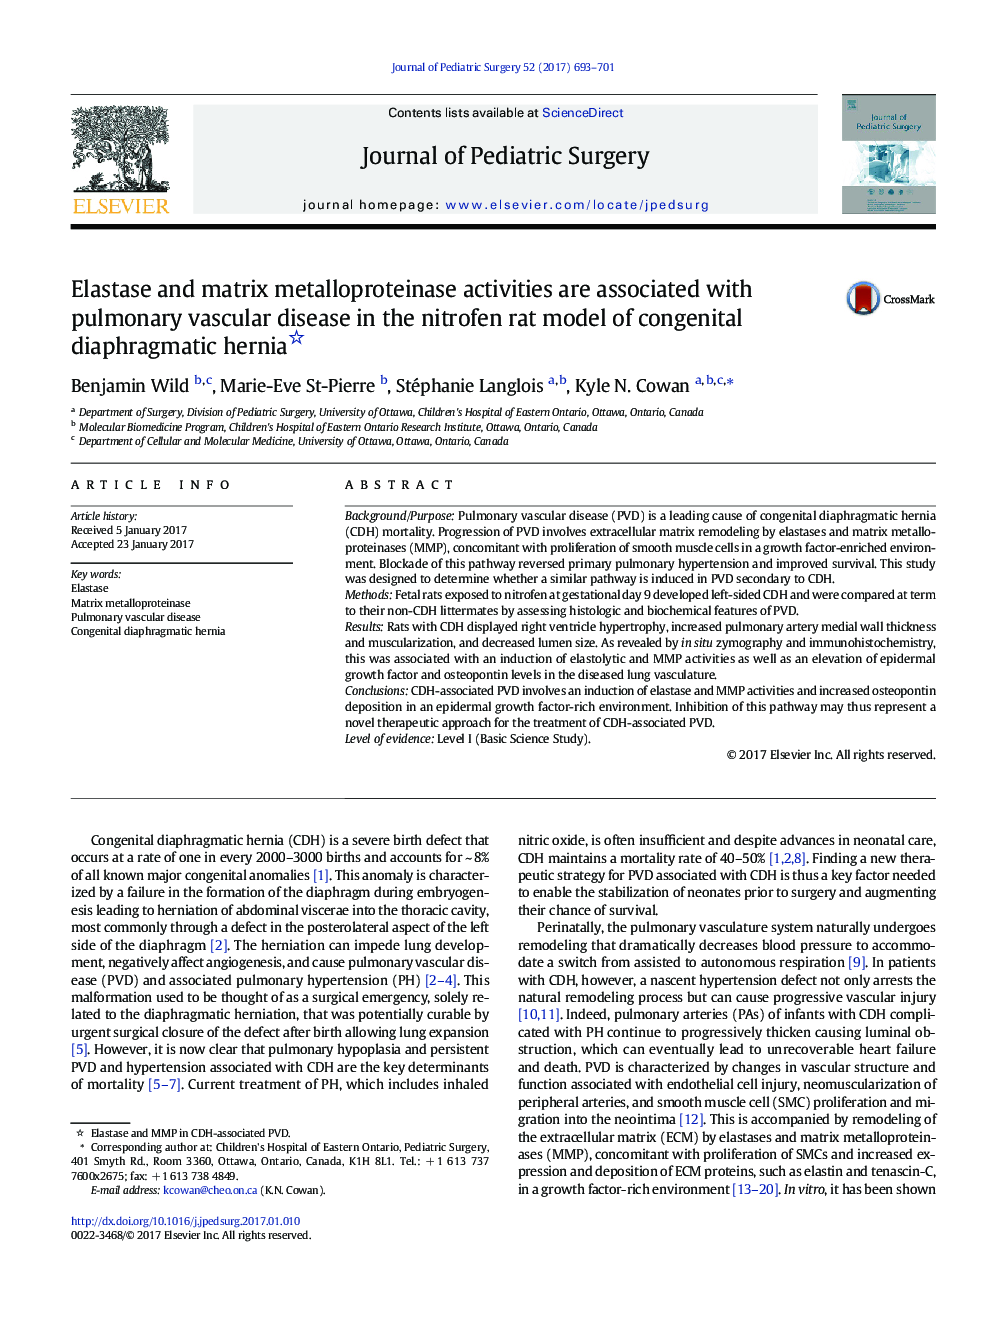 CAPS PaperElastase and matrix metalloproteinase activities are associated with pulmonary vascular disease in the nitrofen rat model of congenital diaphragmatic hernia